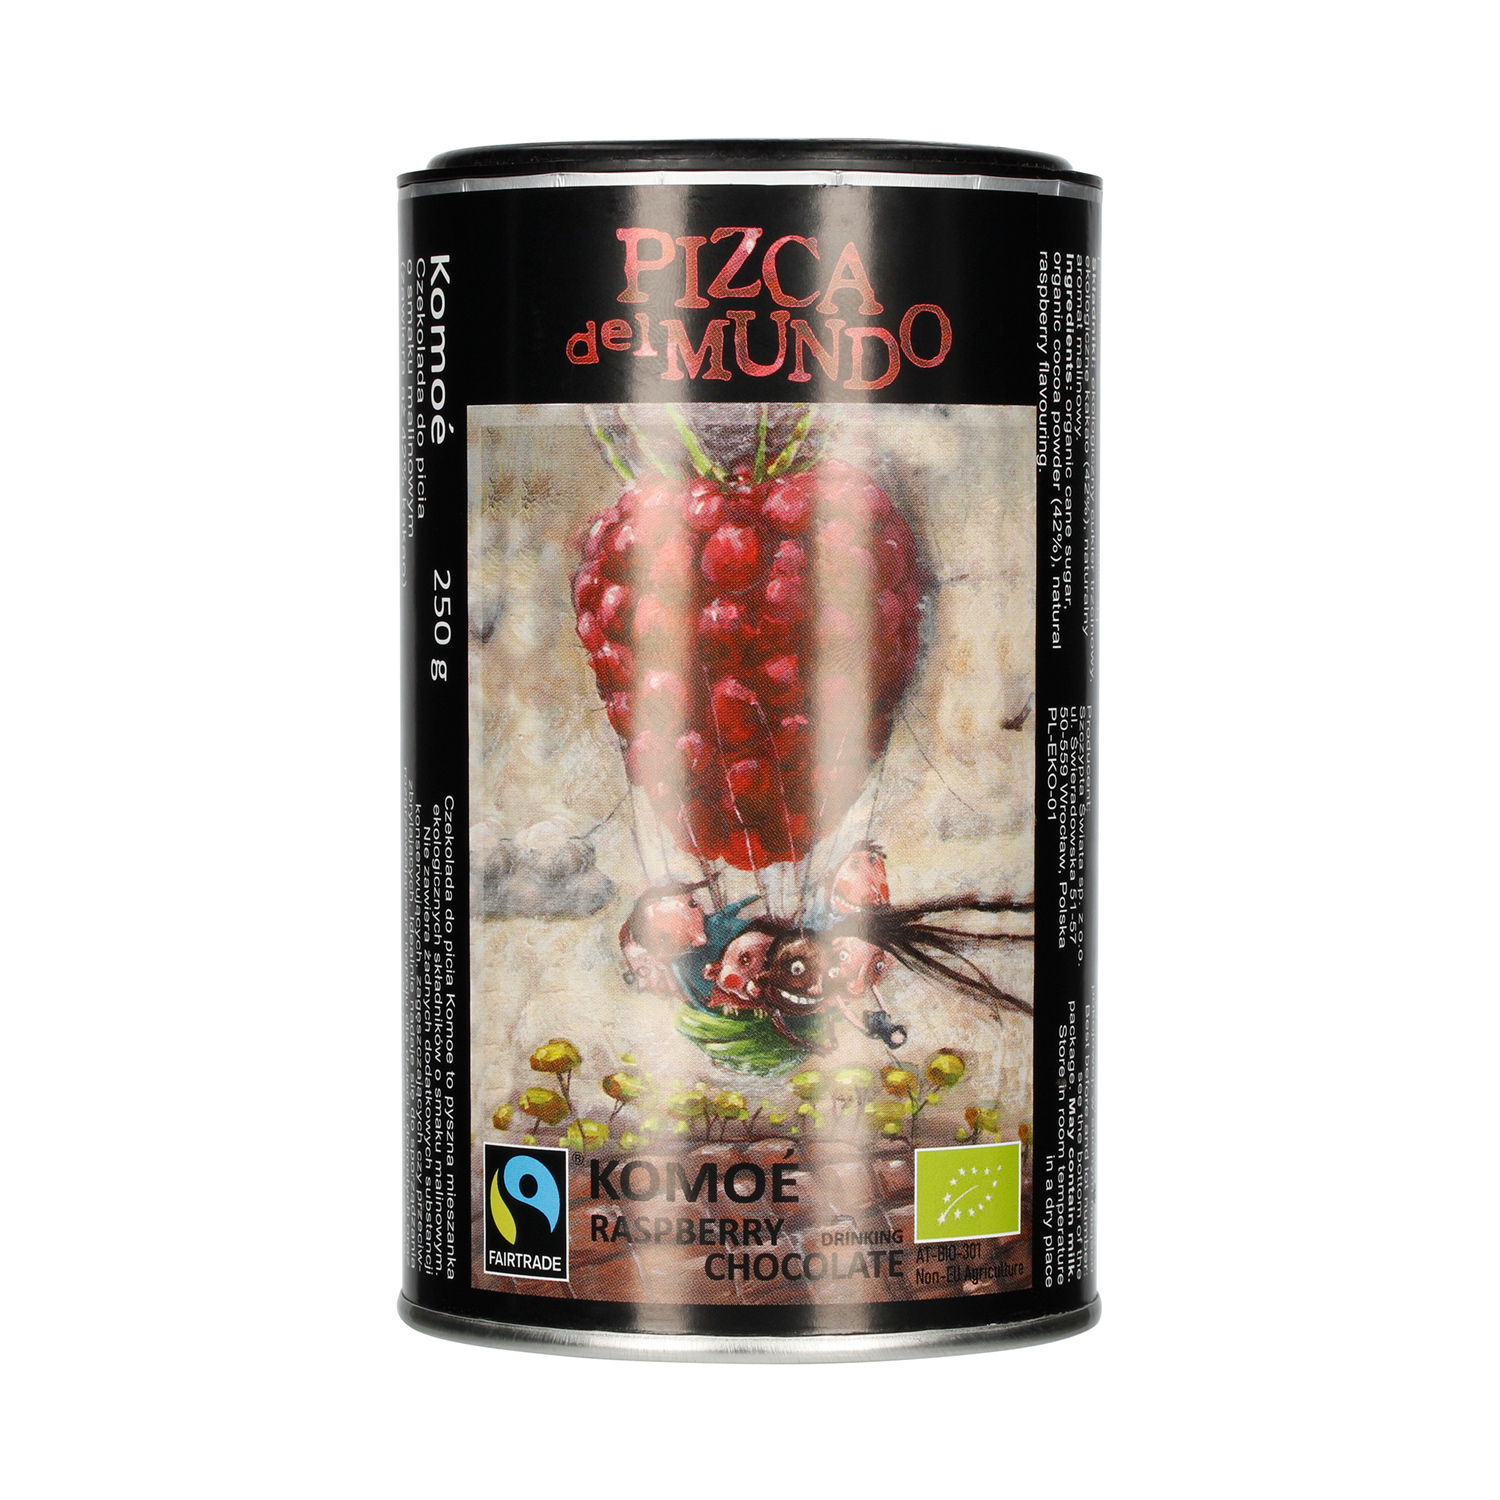 Pizca del Mundo - Komoe - Drinking chocolate raspberry 250g